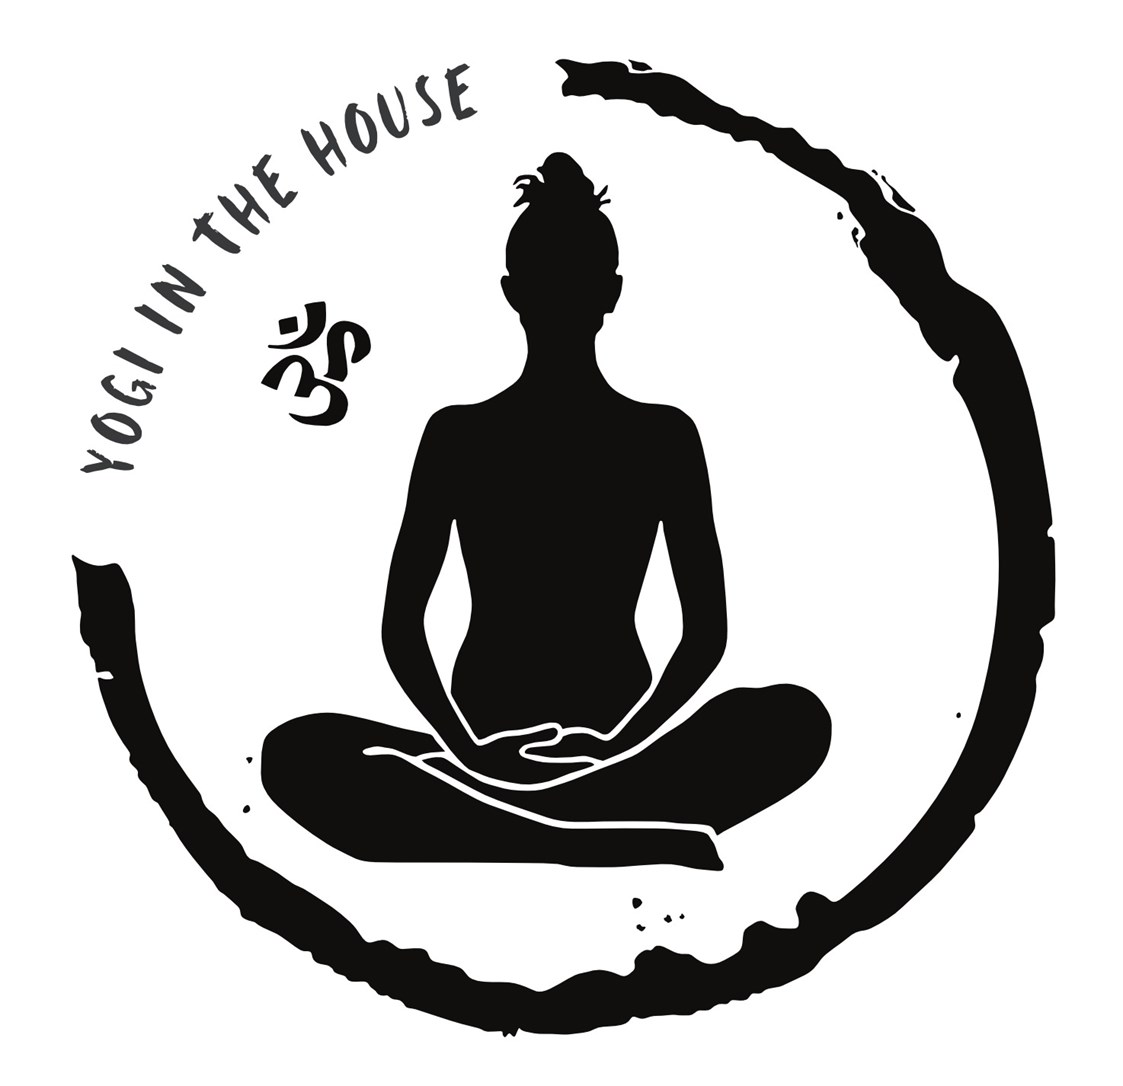 Yoga: Carola Felt  - " YOGI IN THE HOUSE"